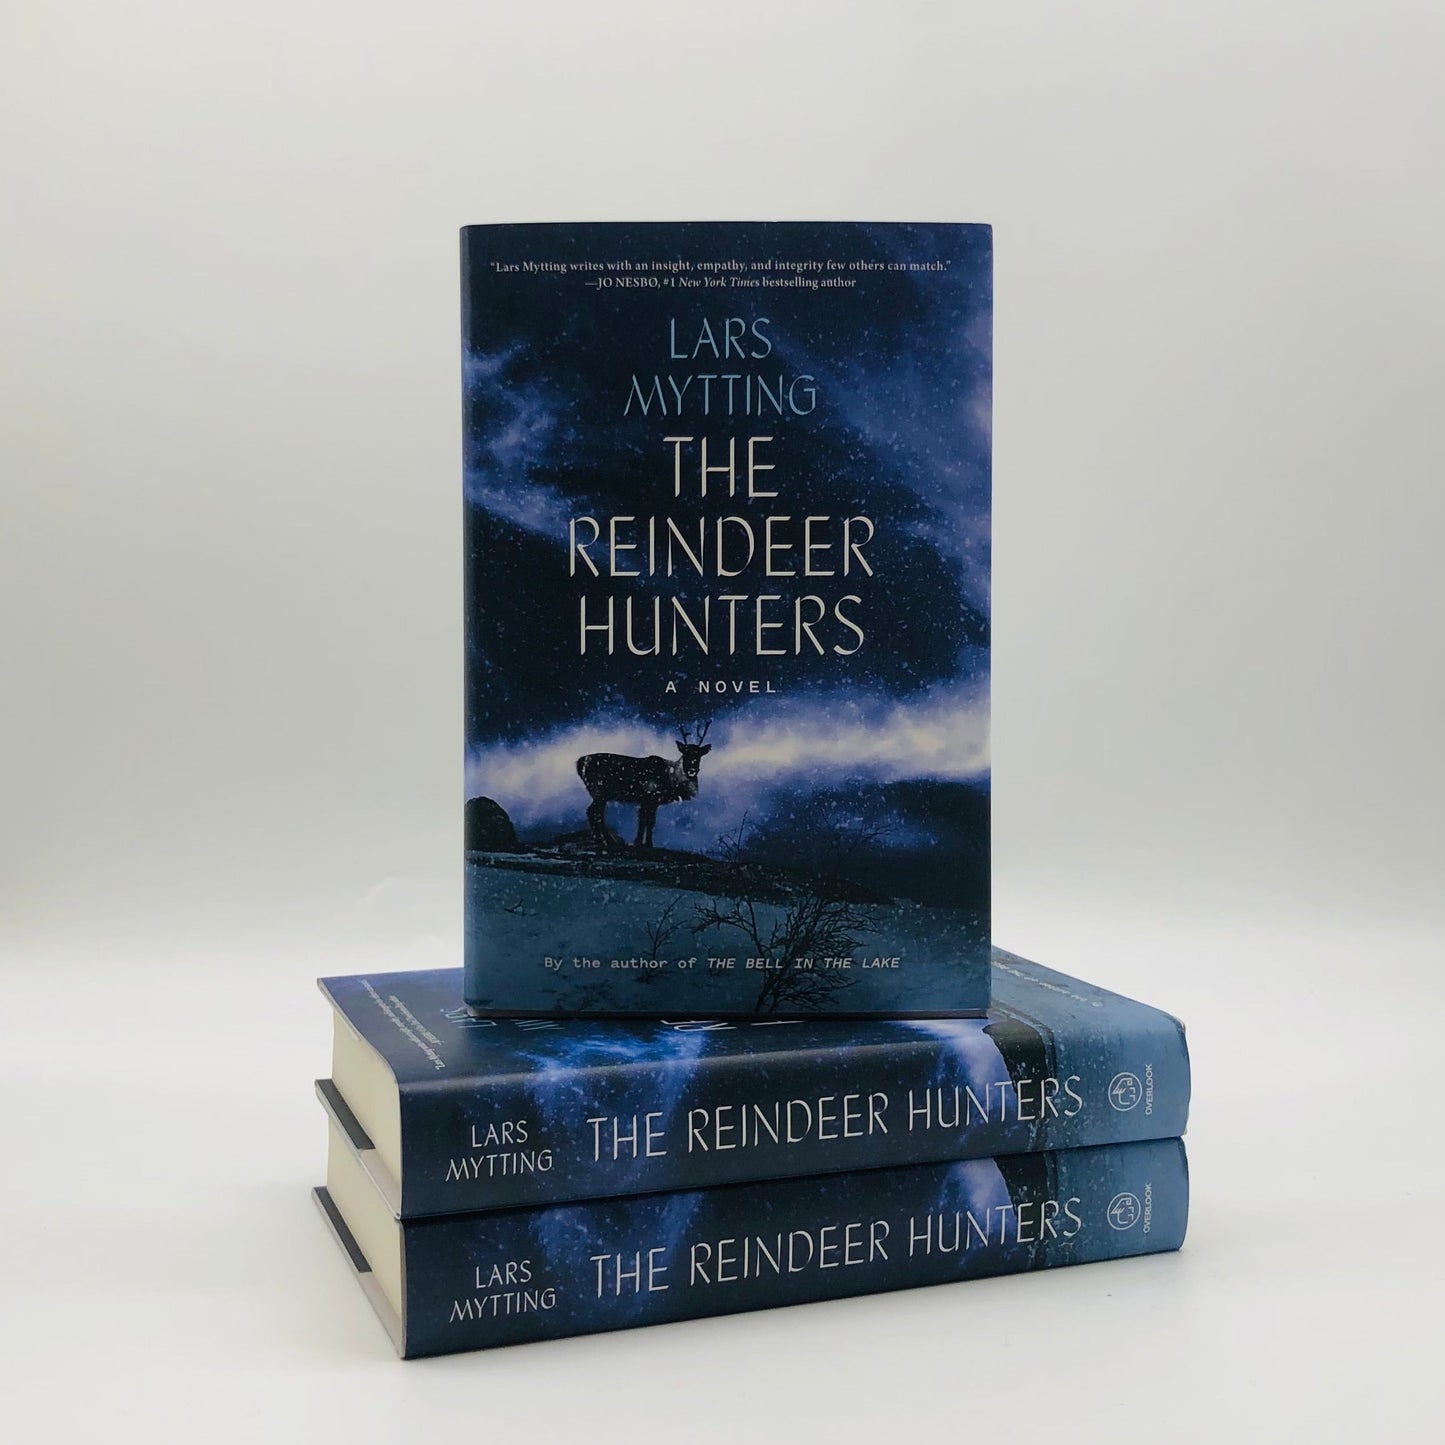 The Reindeer Hunters (a novel) by Lars Mytting